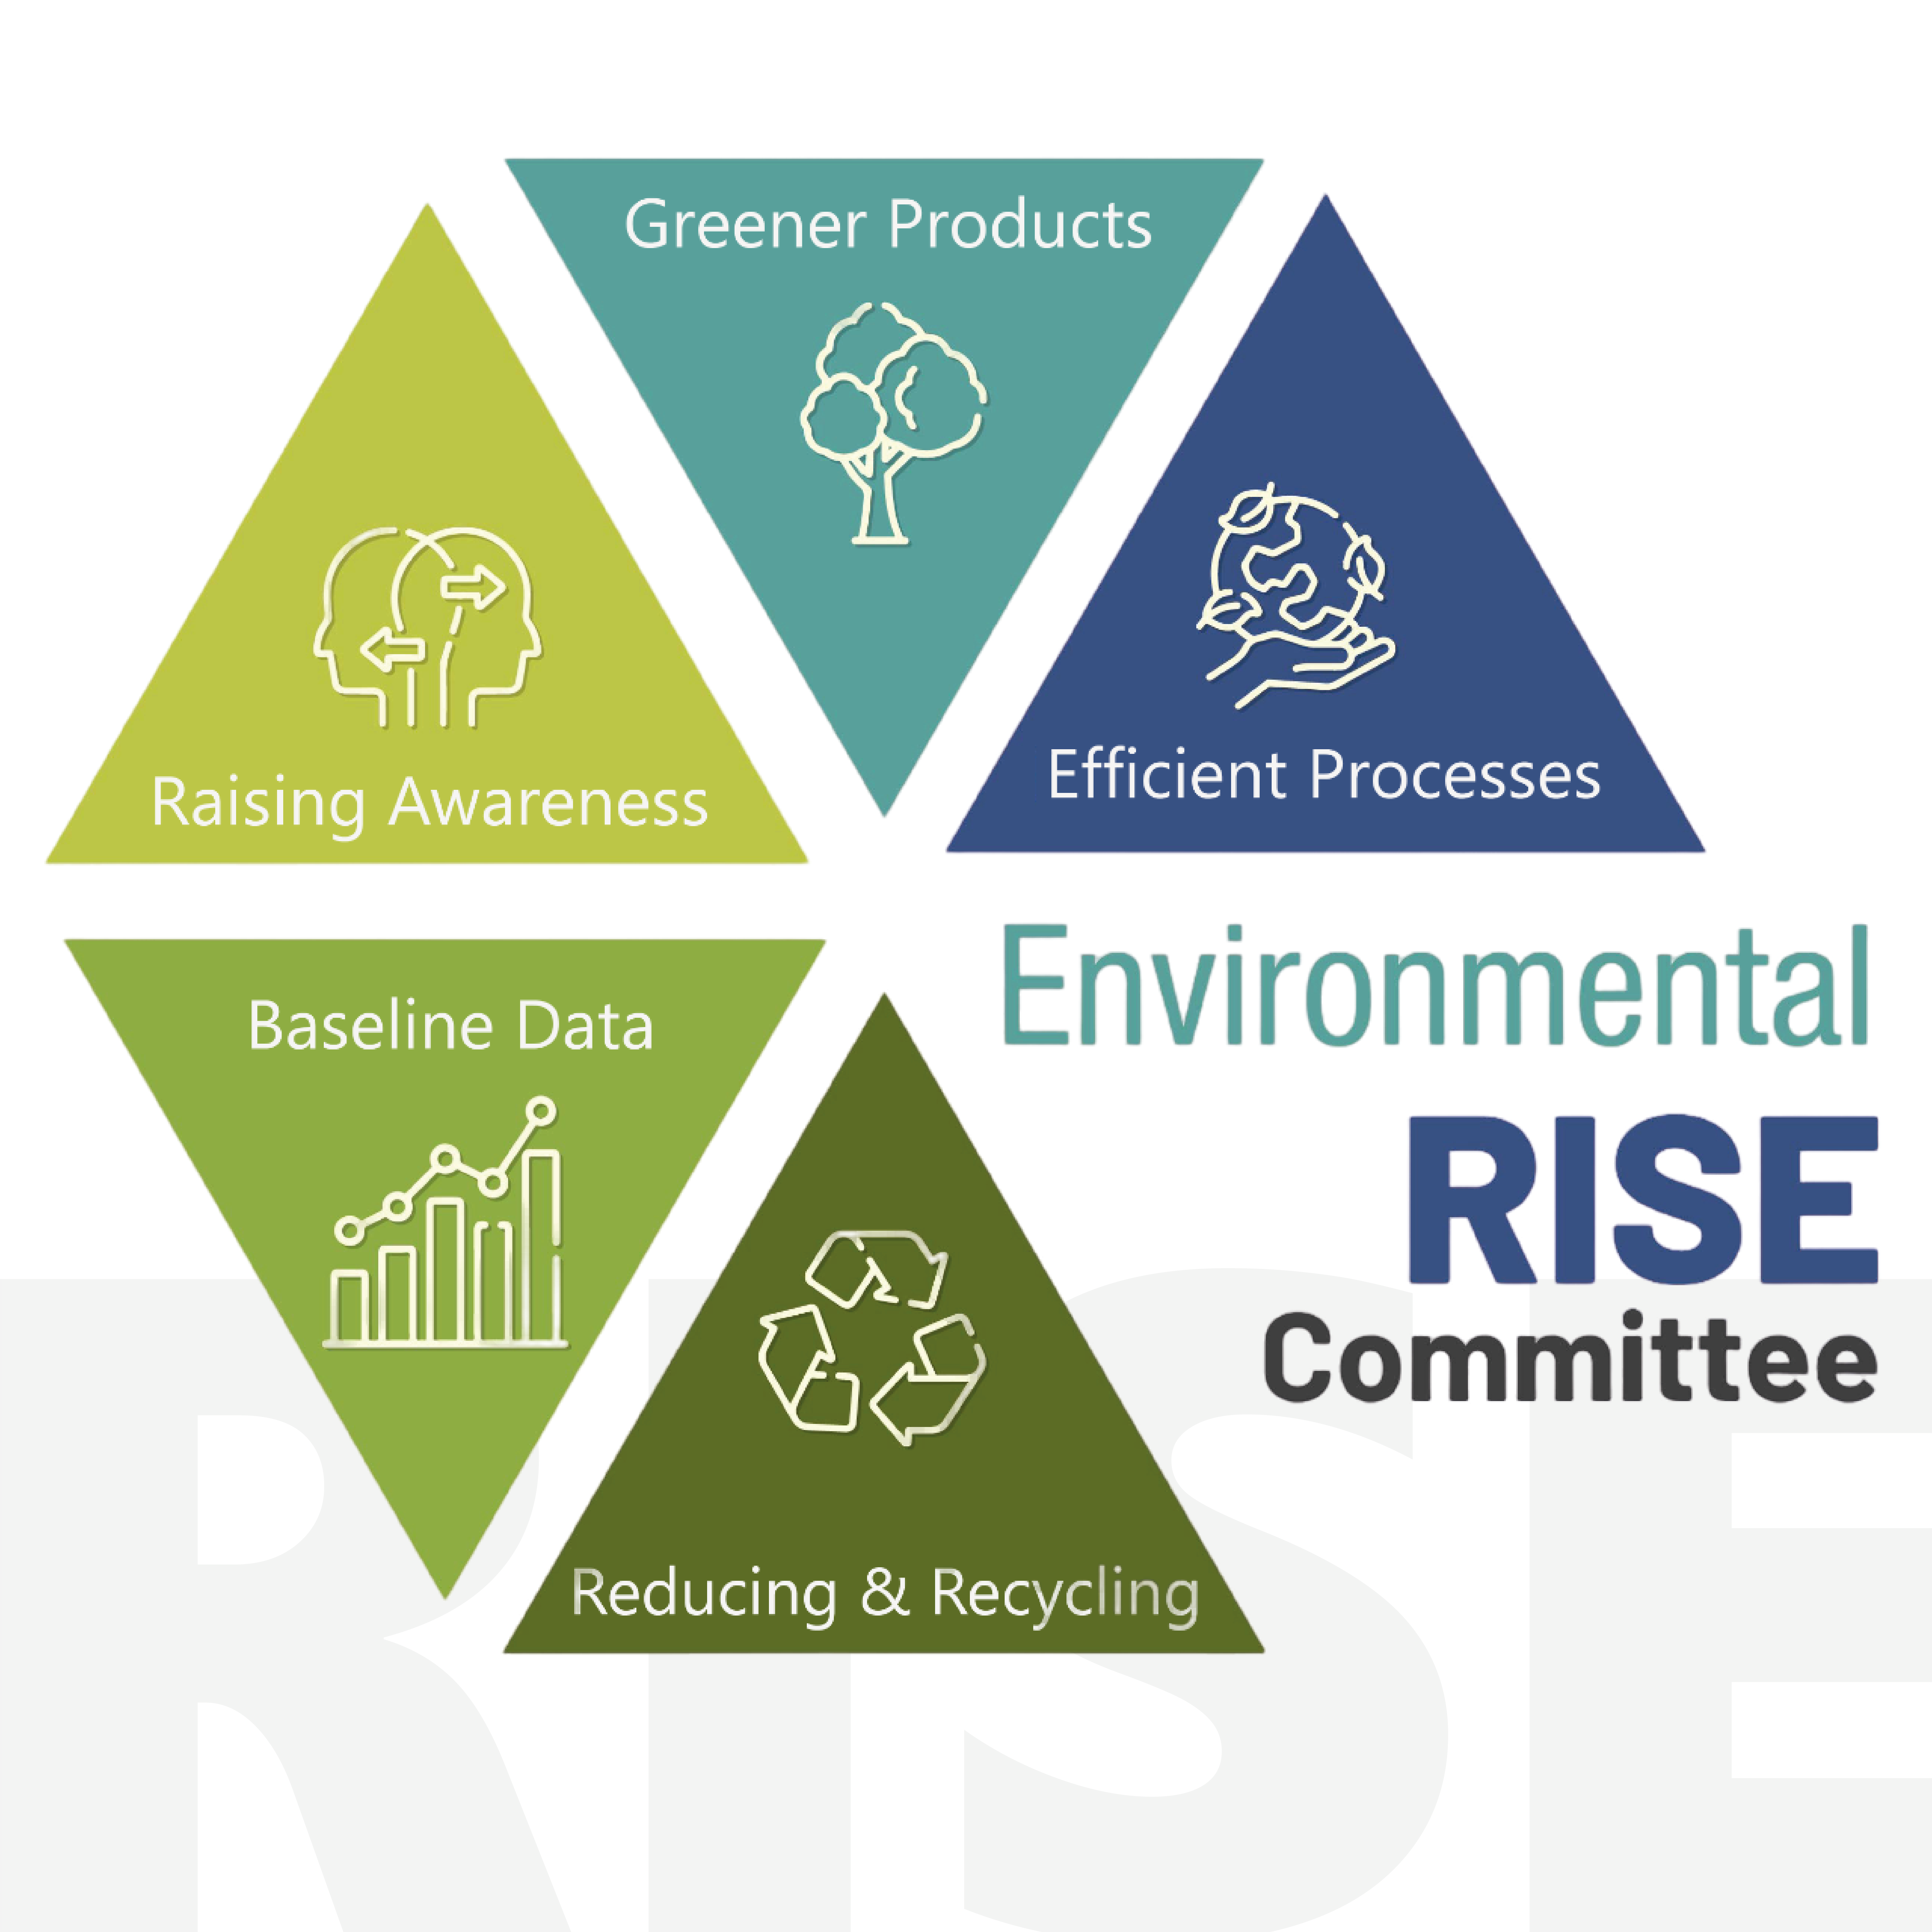 Corporate environmental responsibility program